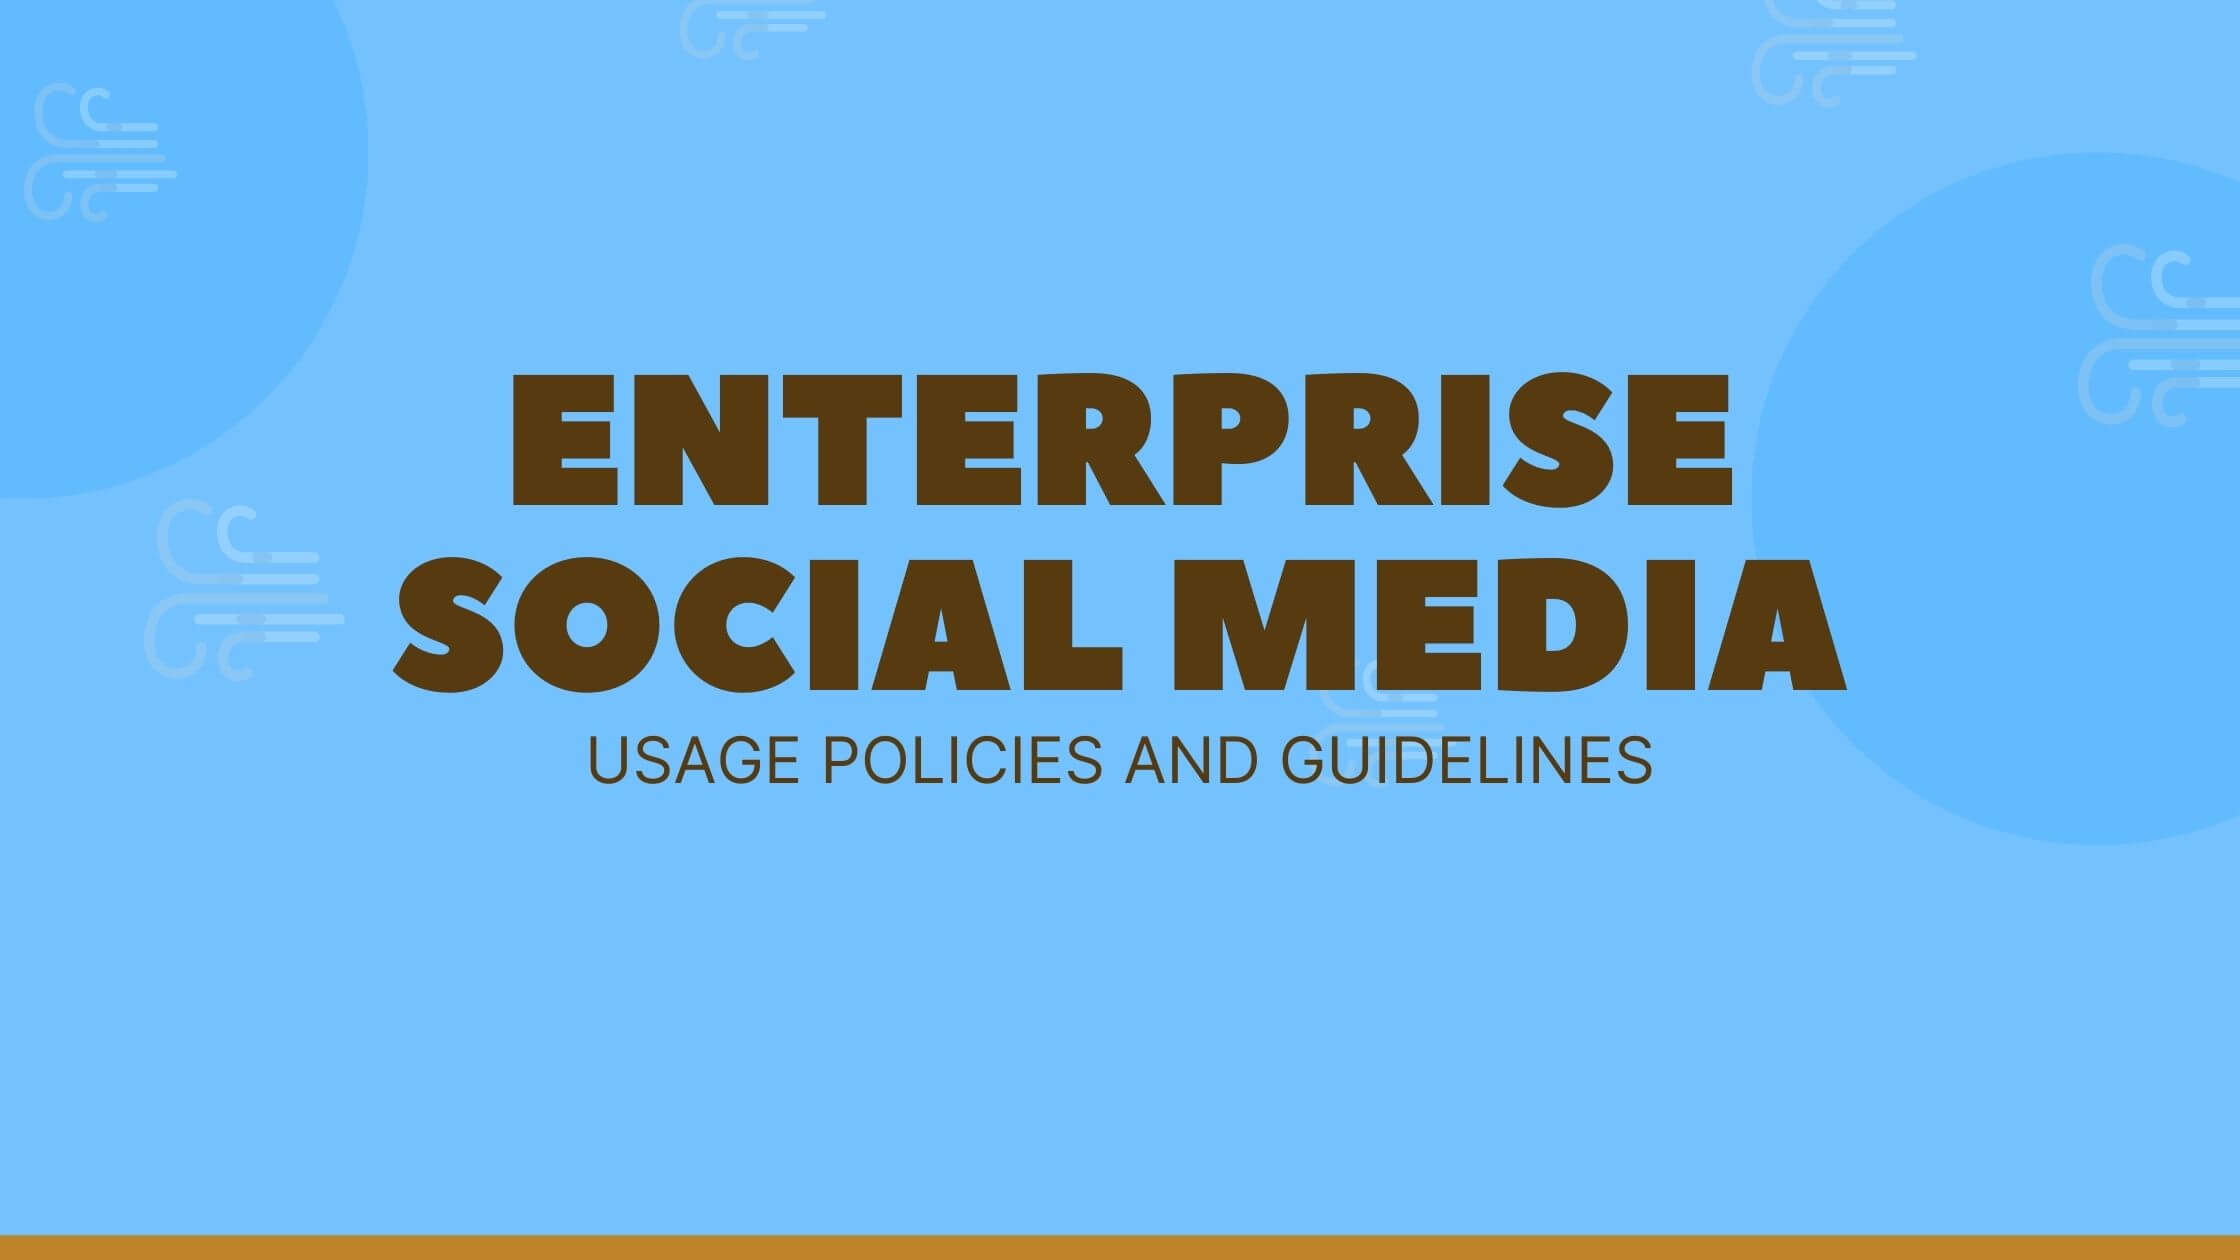 Enterprise Social Media Usage and Guidelines